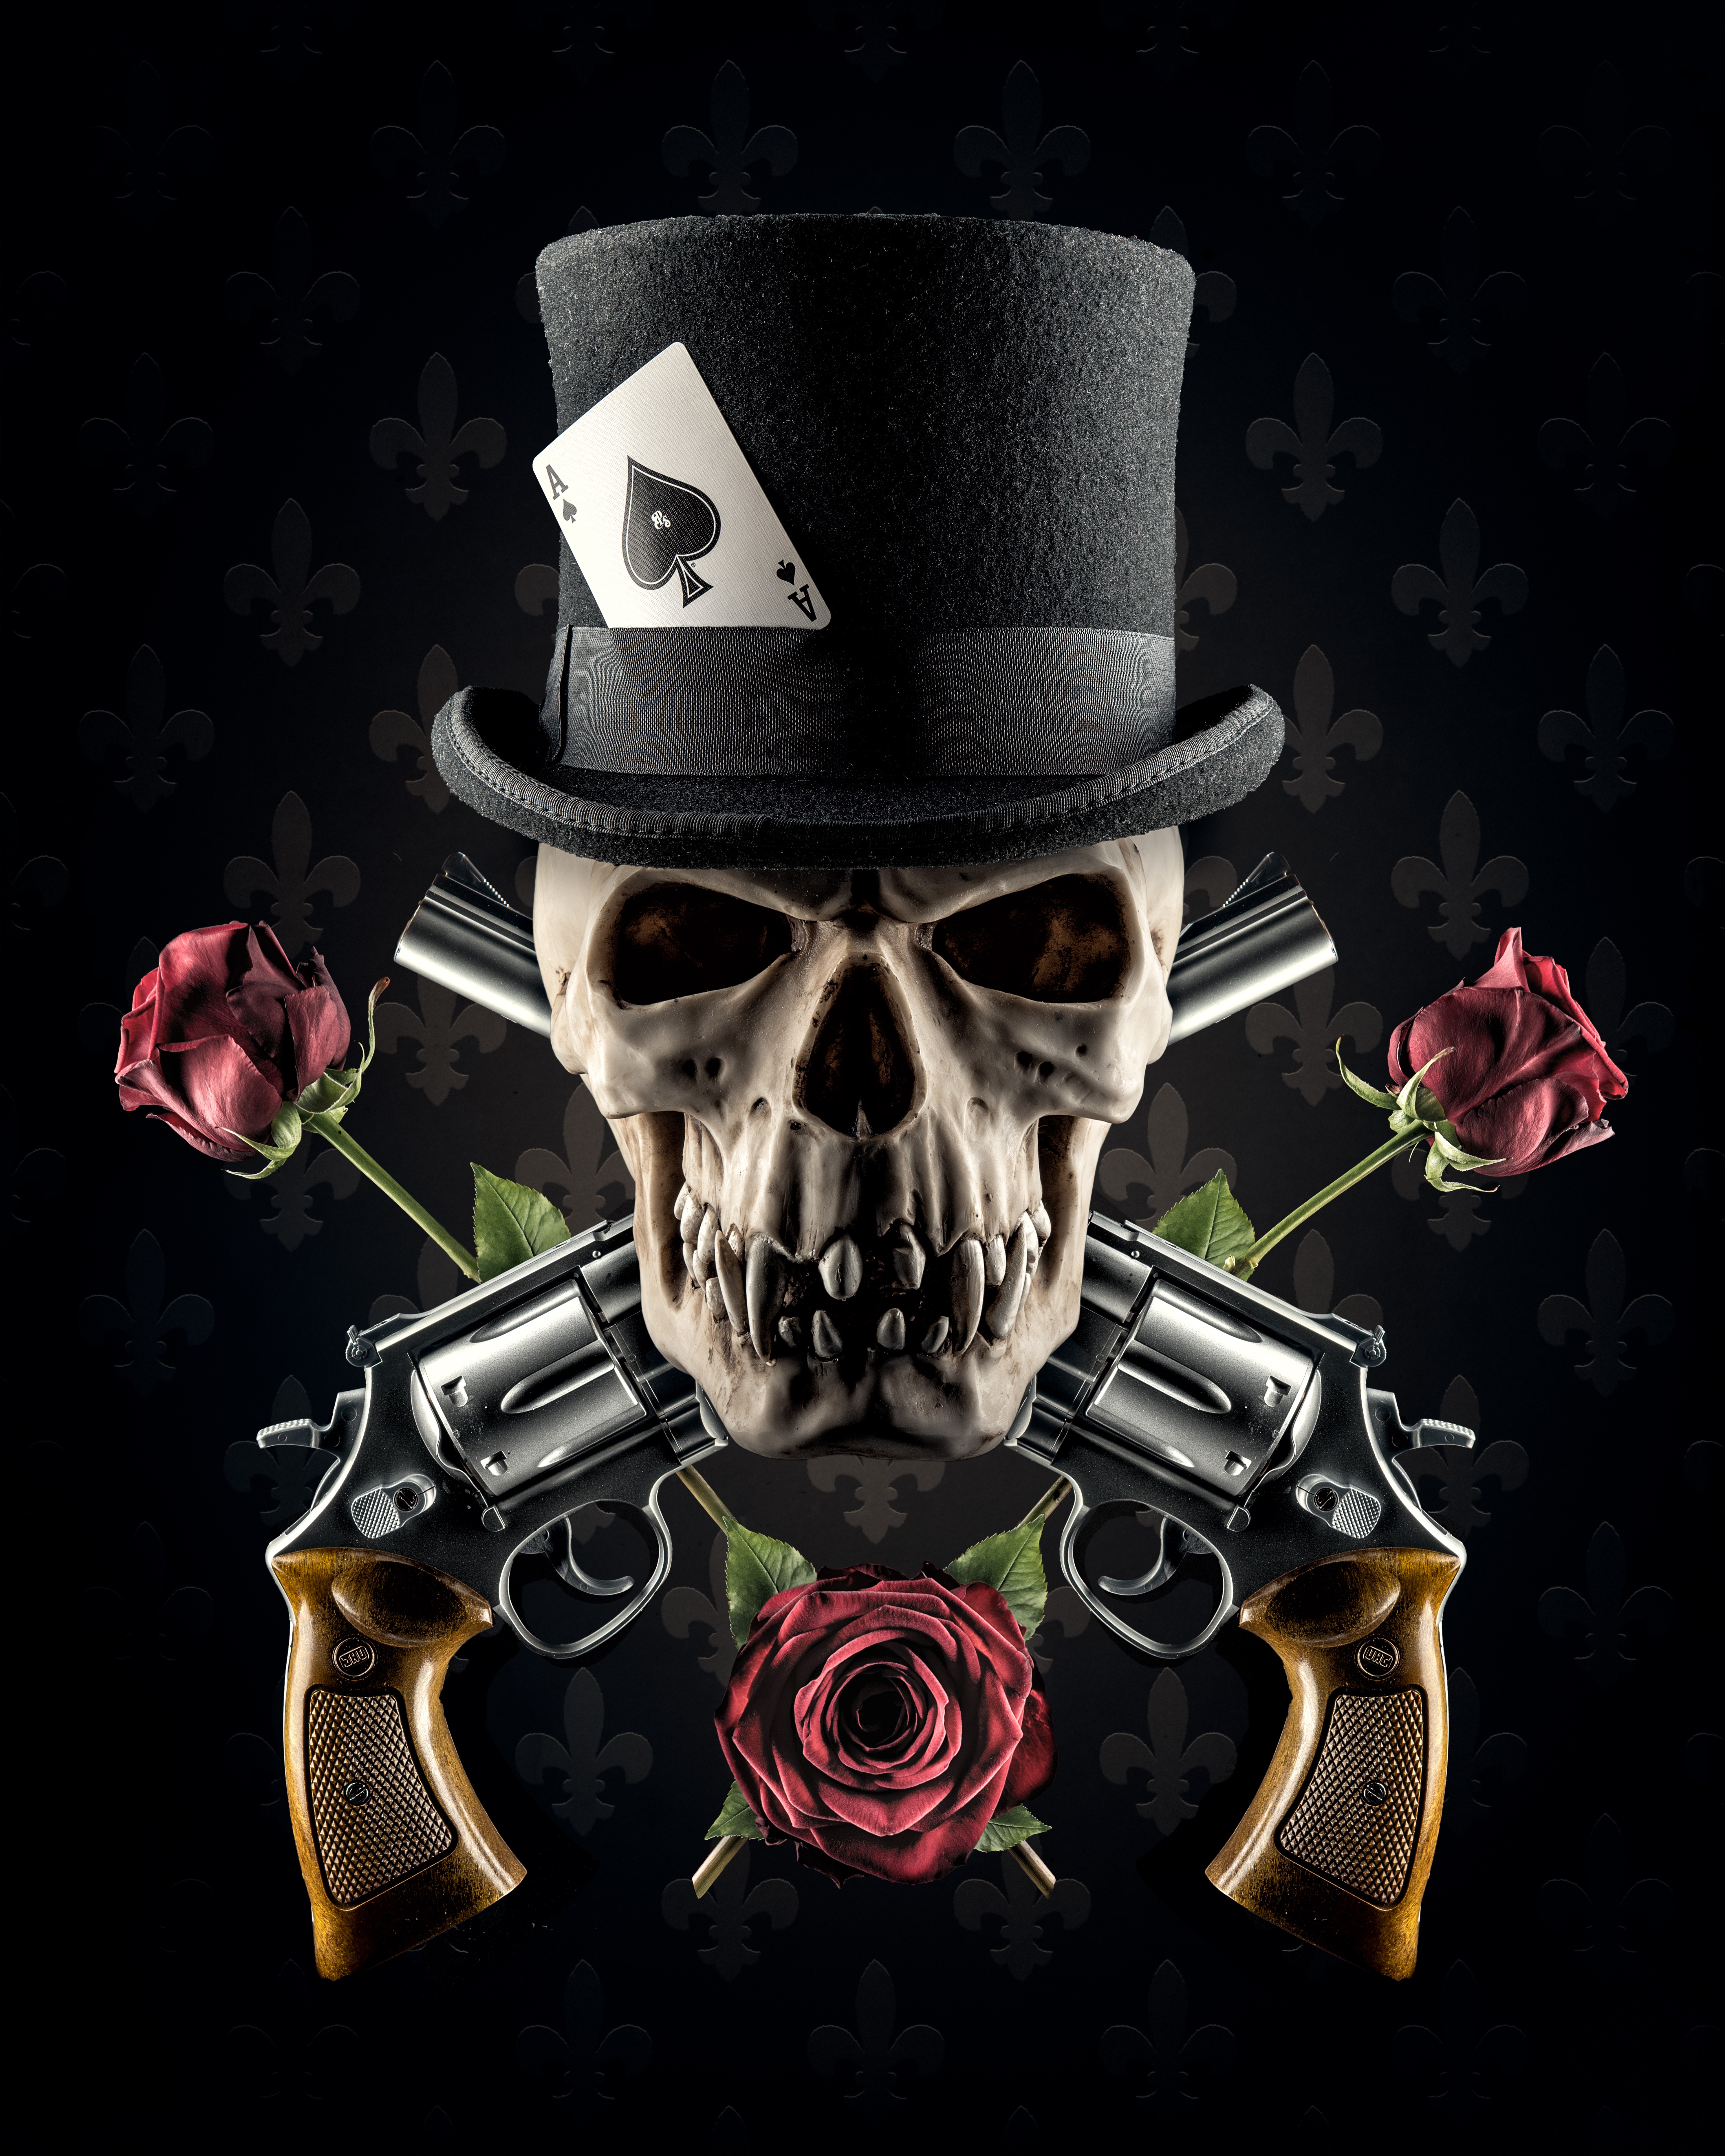 4k 5k Skulls Roses Hat Black Background Revolver